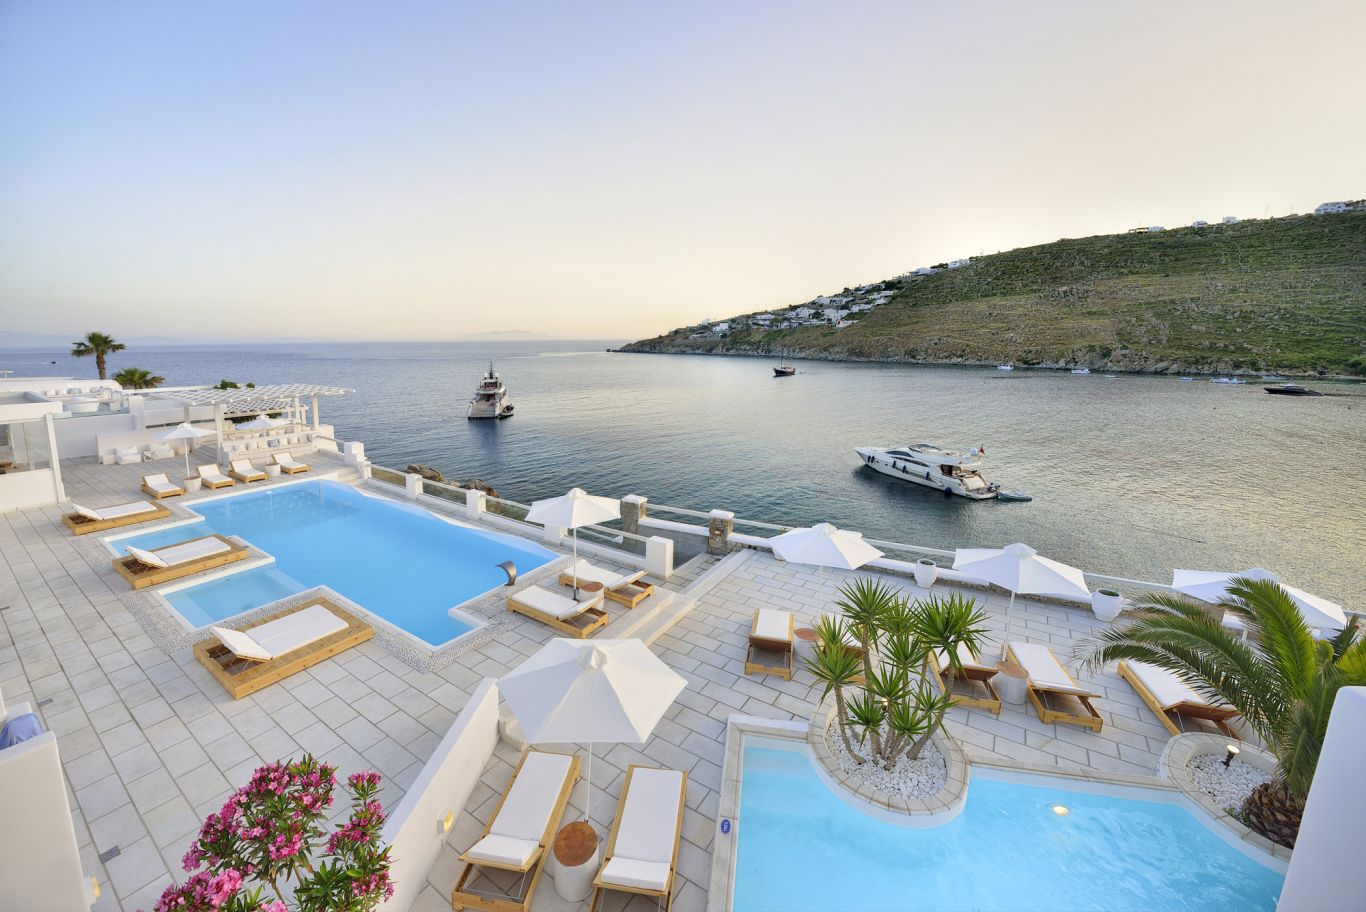 international girls getaways, the deck and pool at Nissaki Boutique Hotel in Mykonos, Greece, girl time, best International travel destinations, summer travel 